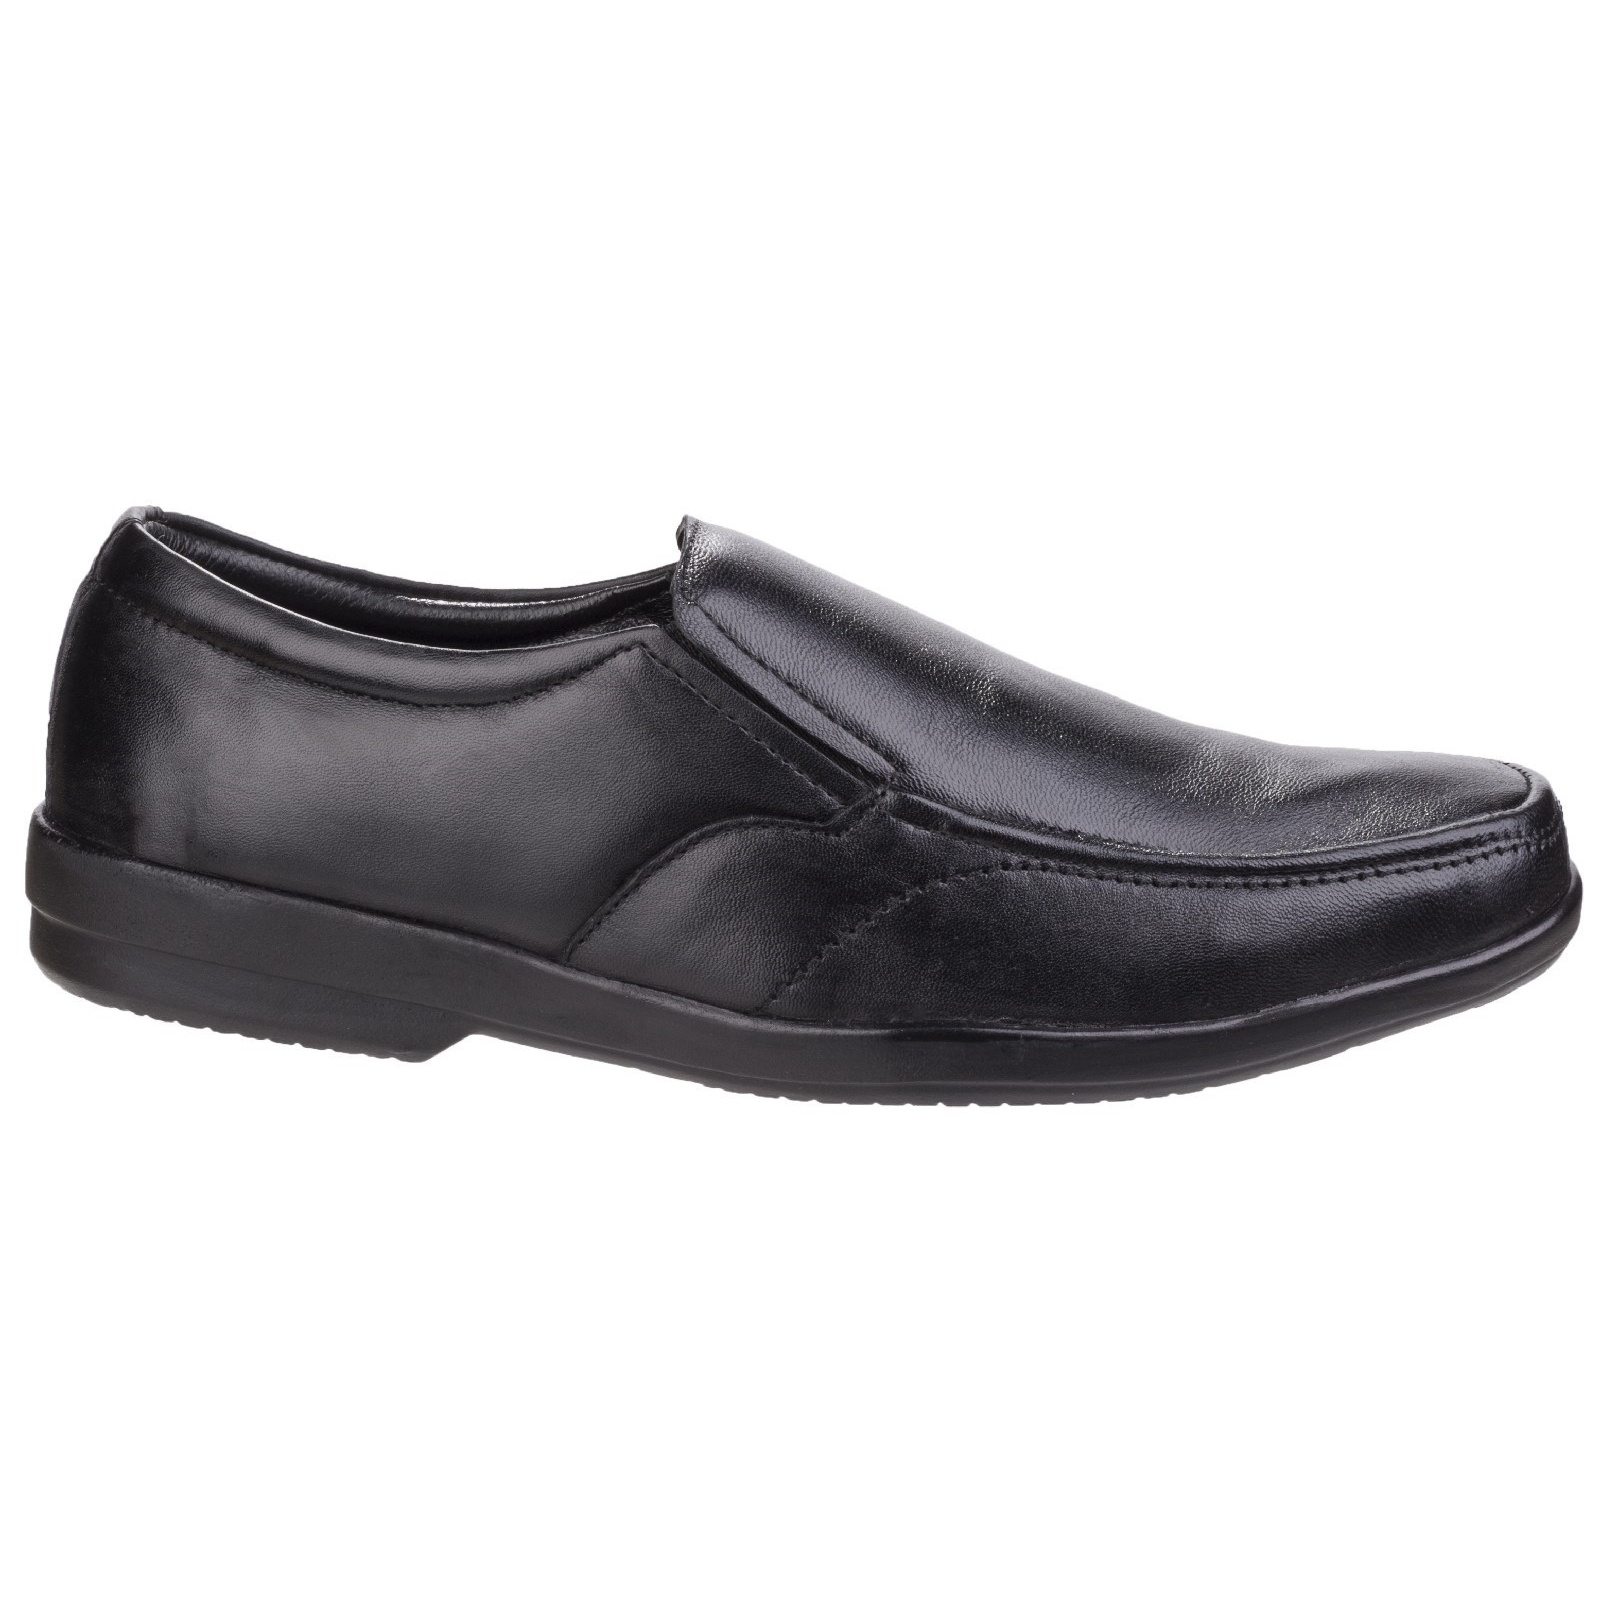 Fleet & Foster Mens Alan Formal Apron Toe Slip On Shoes - image 2 of 6